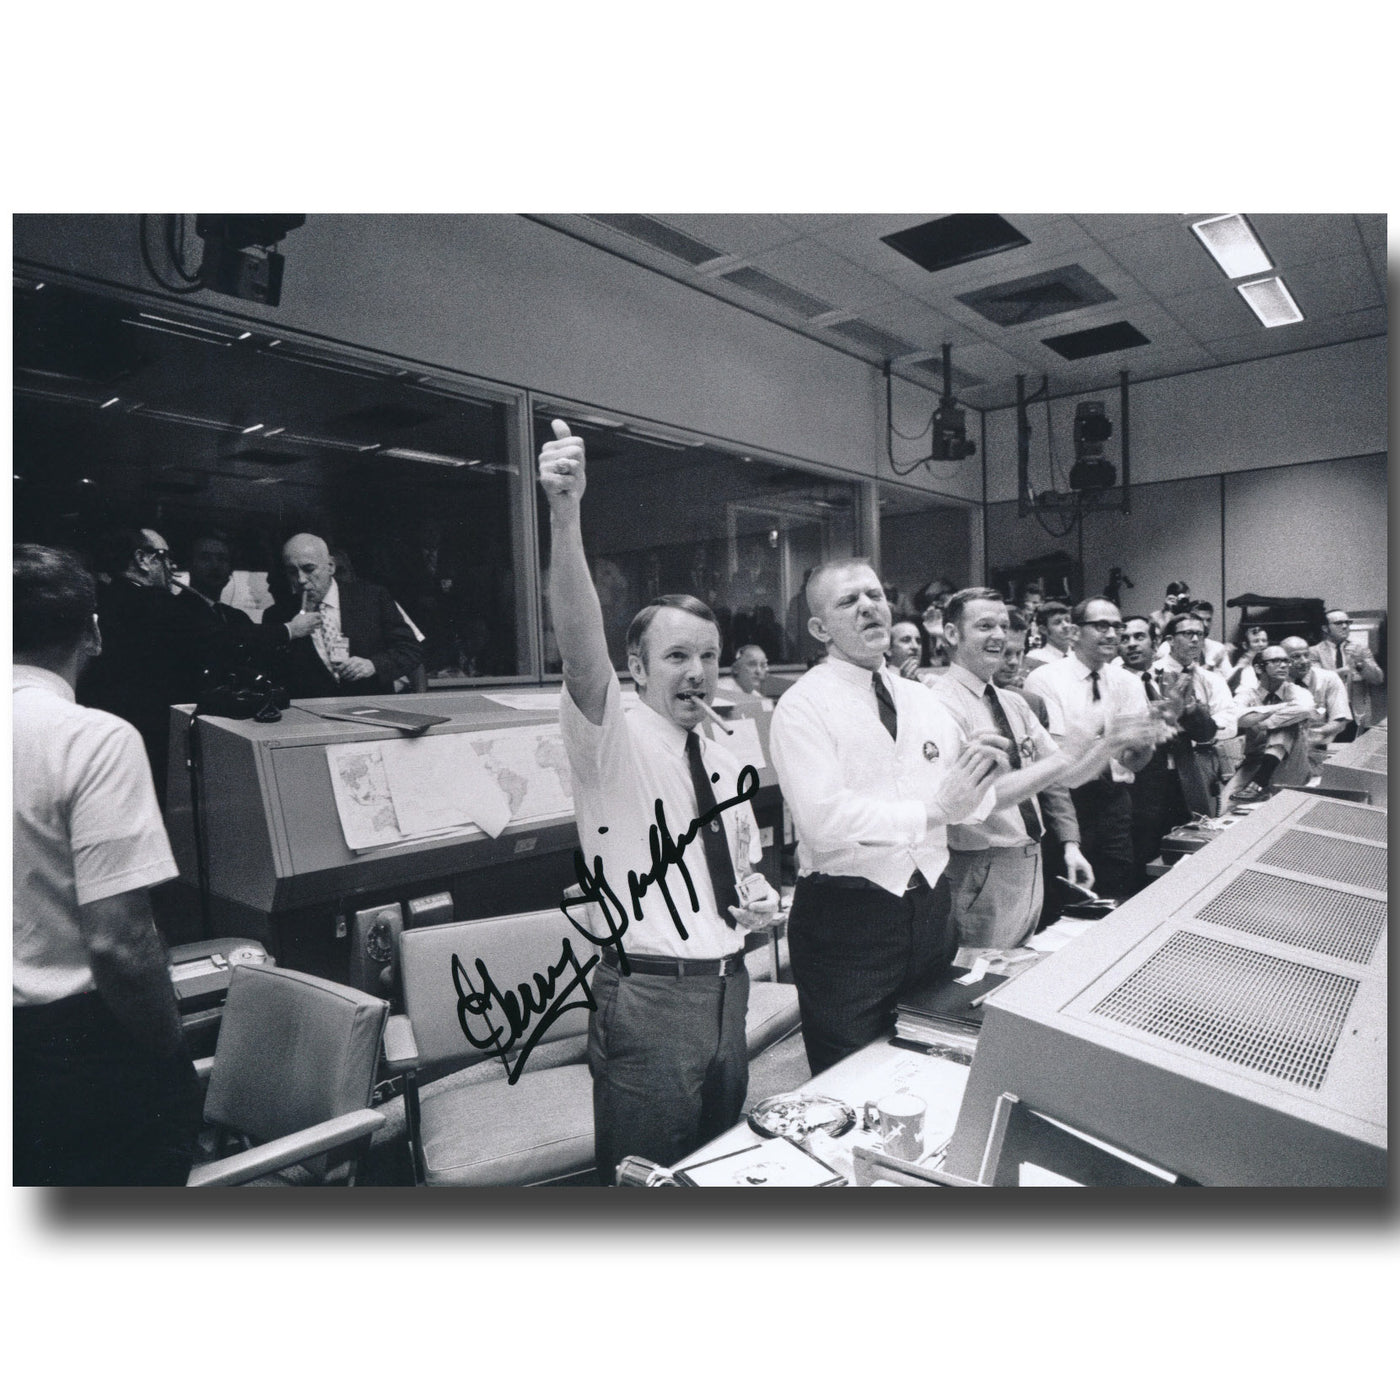 Gerry Griffin – Apollo 13 mission control